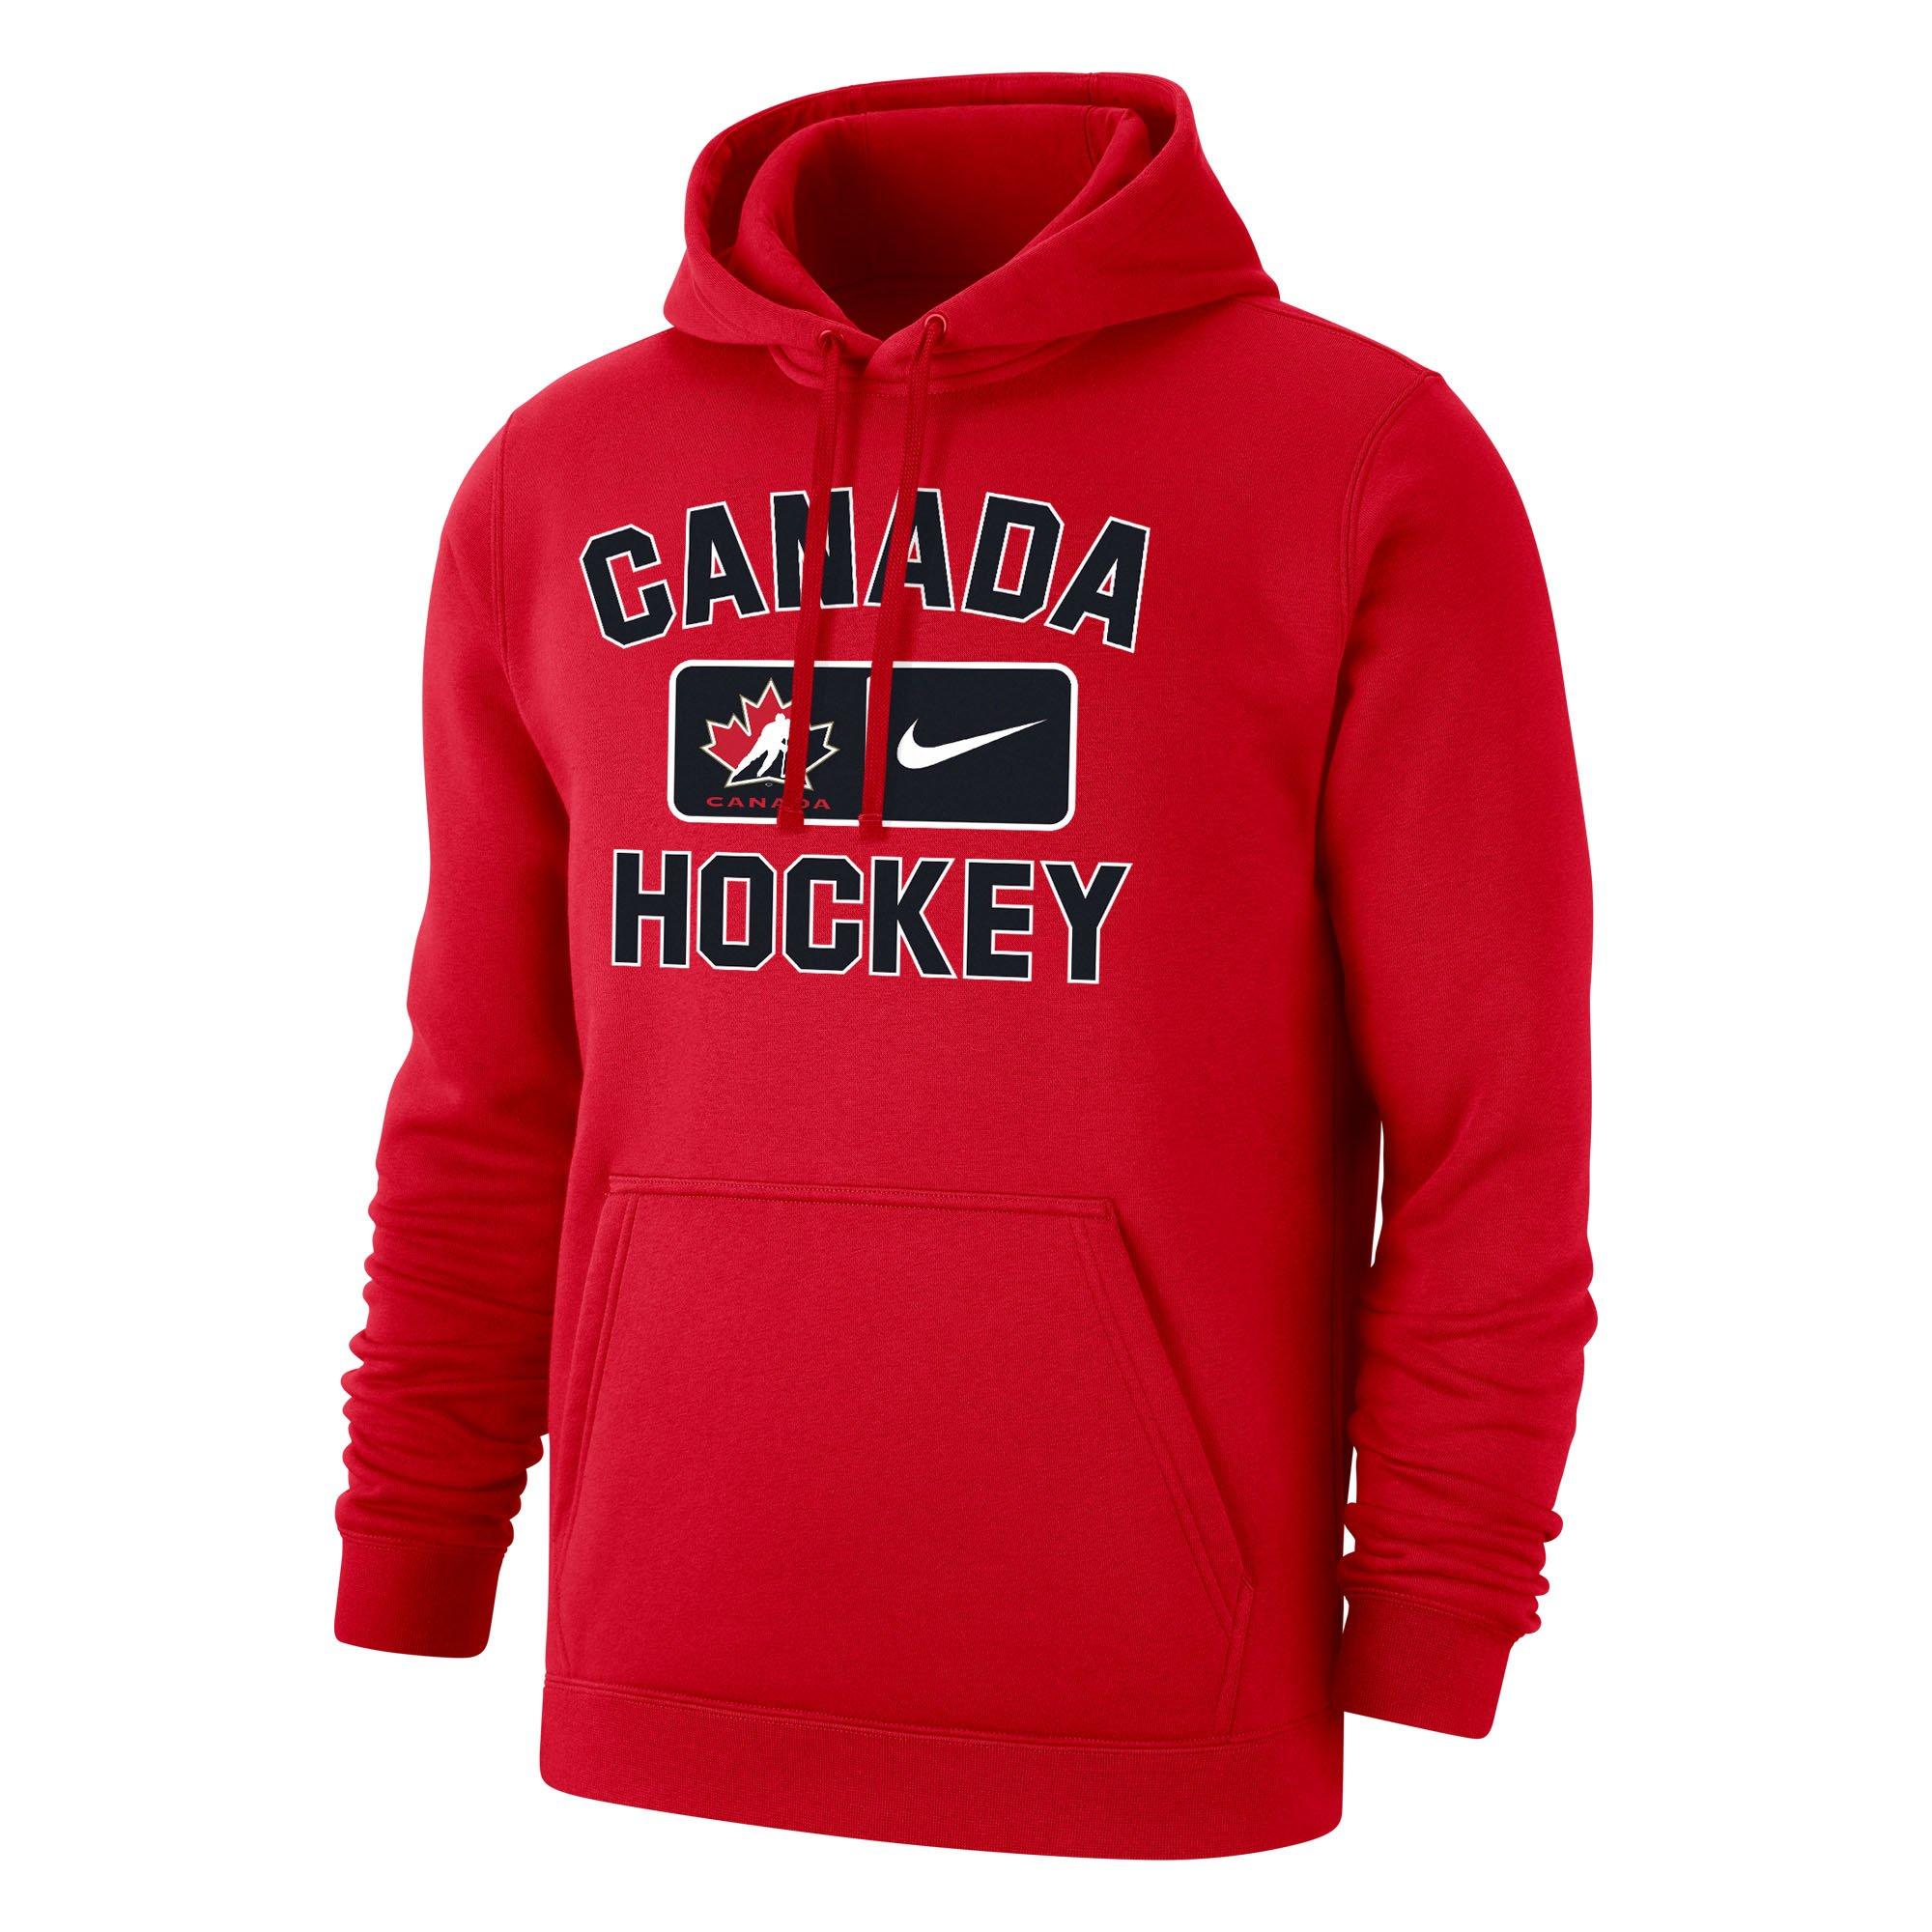 Men's Team Canada Hockey Club Fleece Pullover Hoodie from Nike